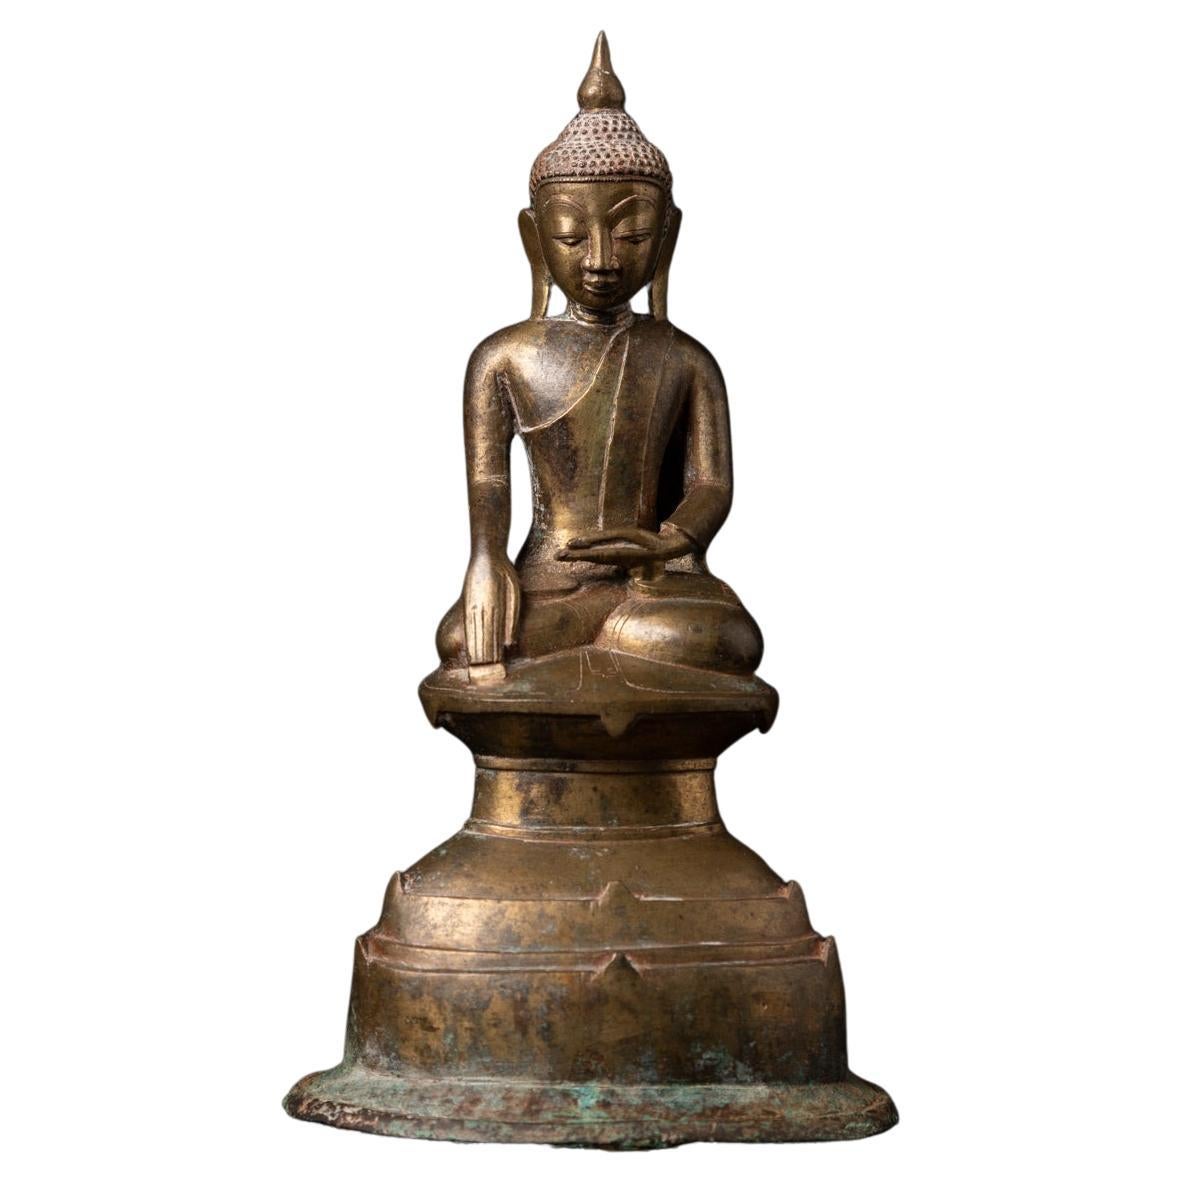 17th century Antique bronze Burmese Buddha statue from Burma